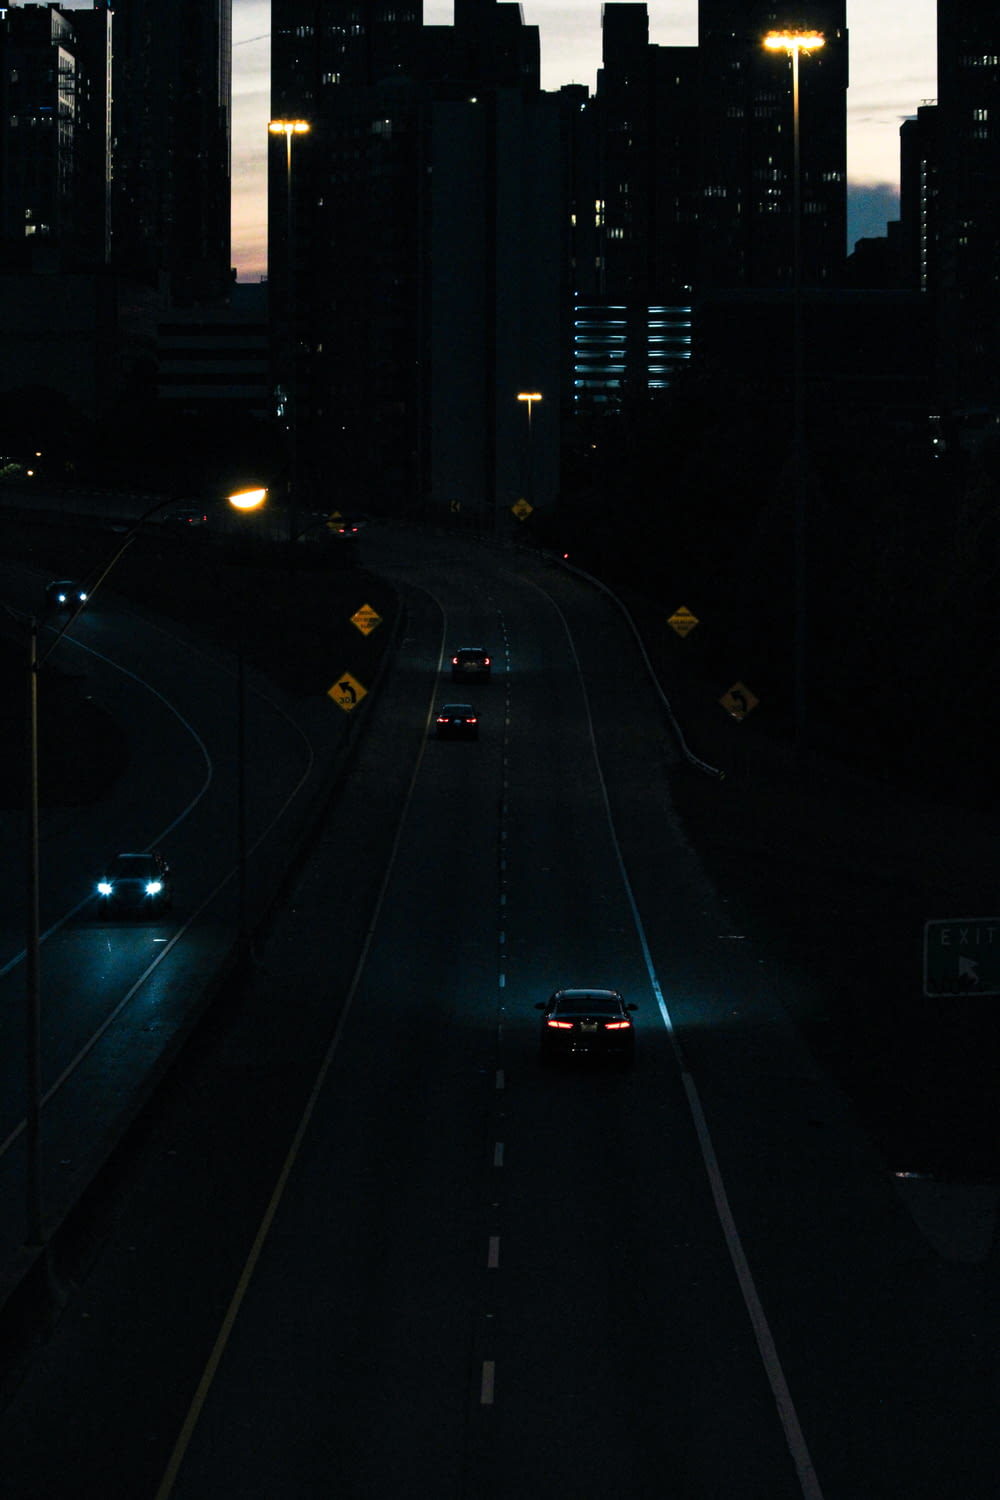 a car driving down a city street at night